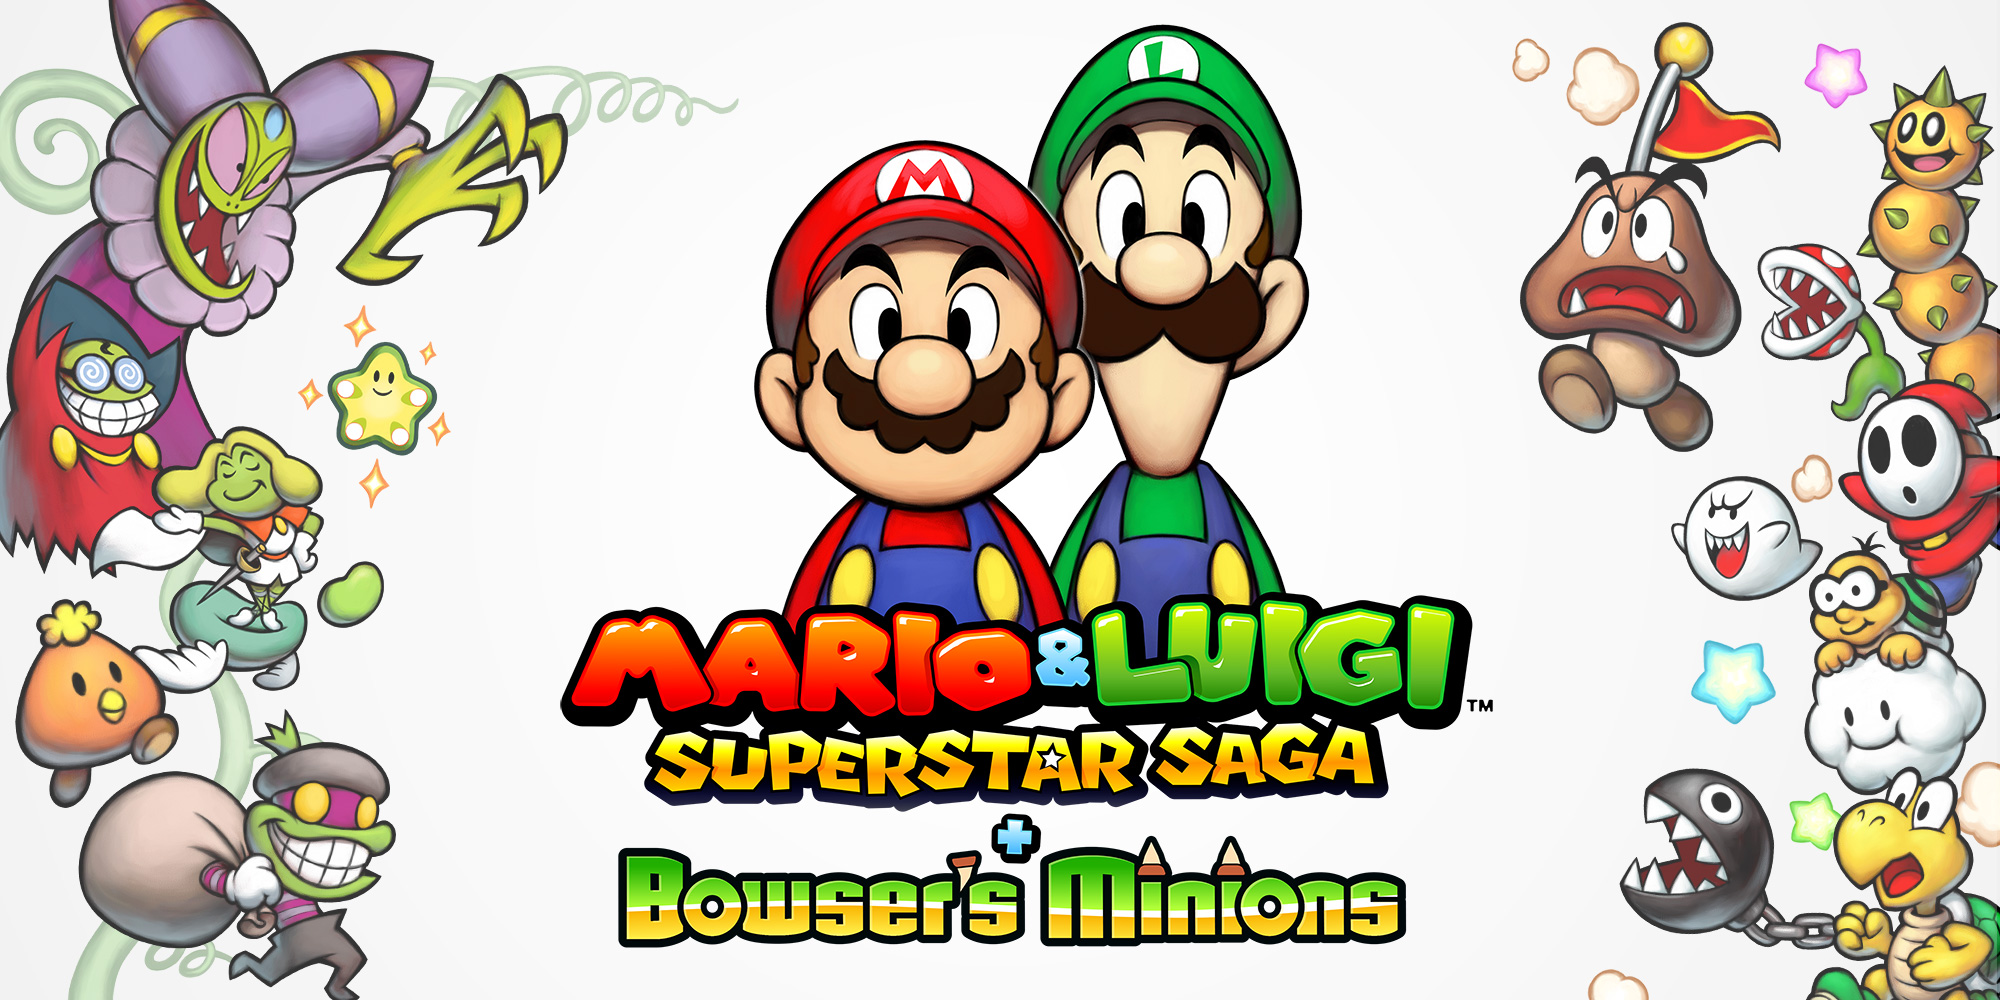 Mario and luigi superstar saga trunkle